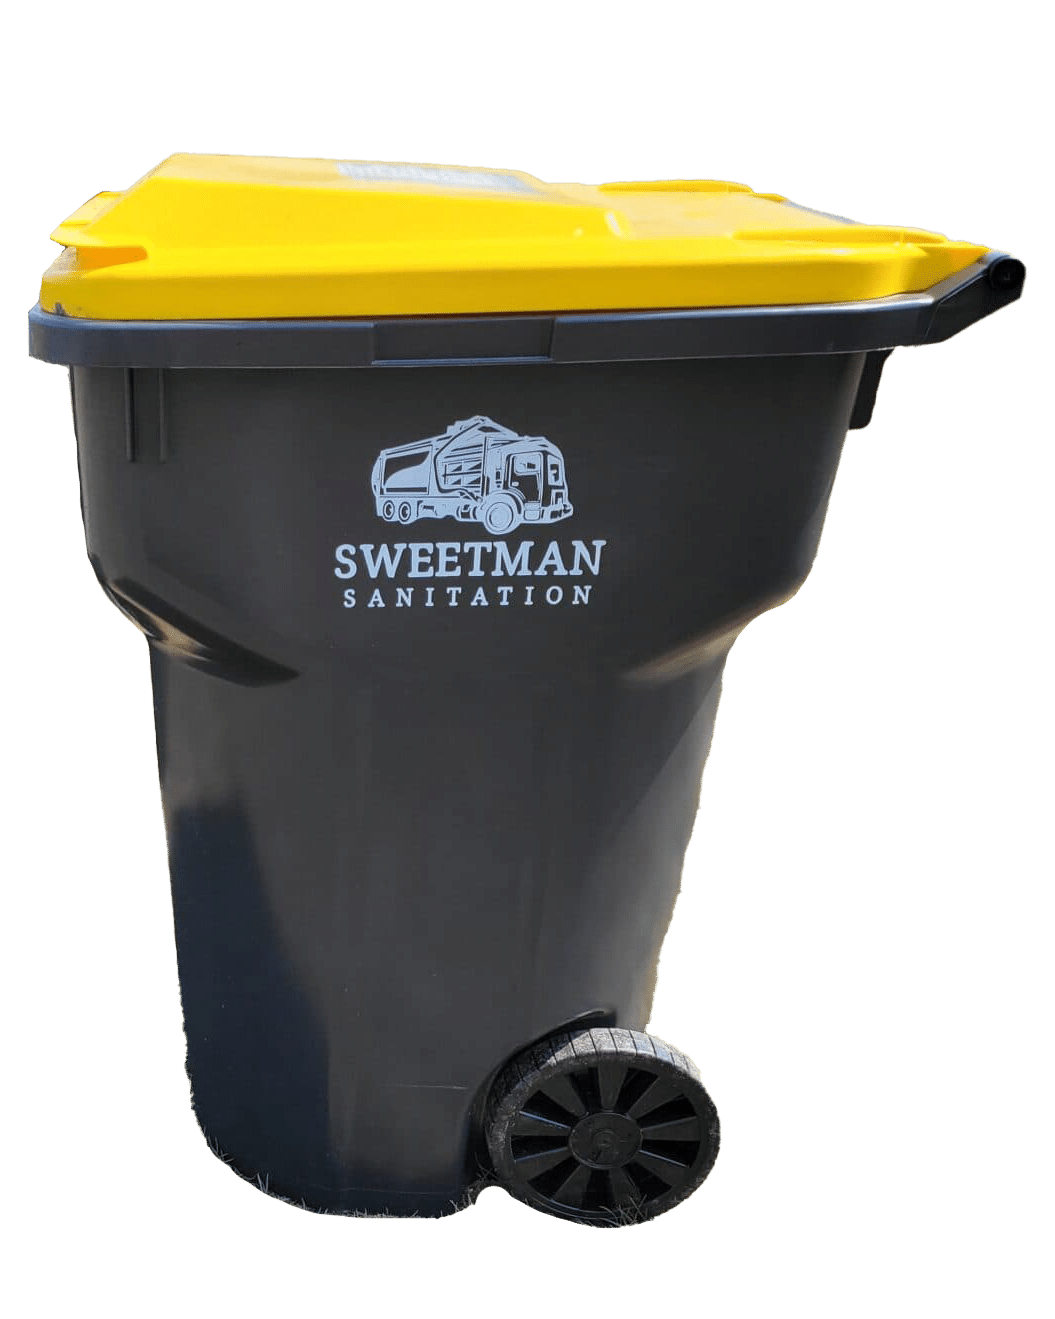 Sweetman Sanitation Recycling Bin